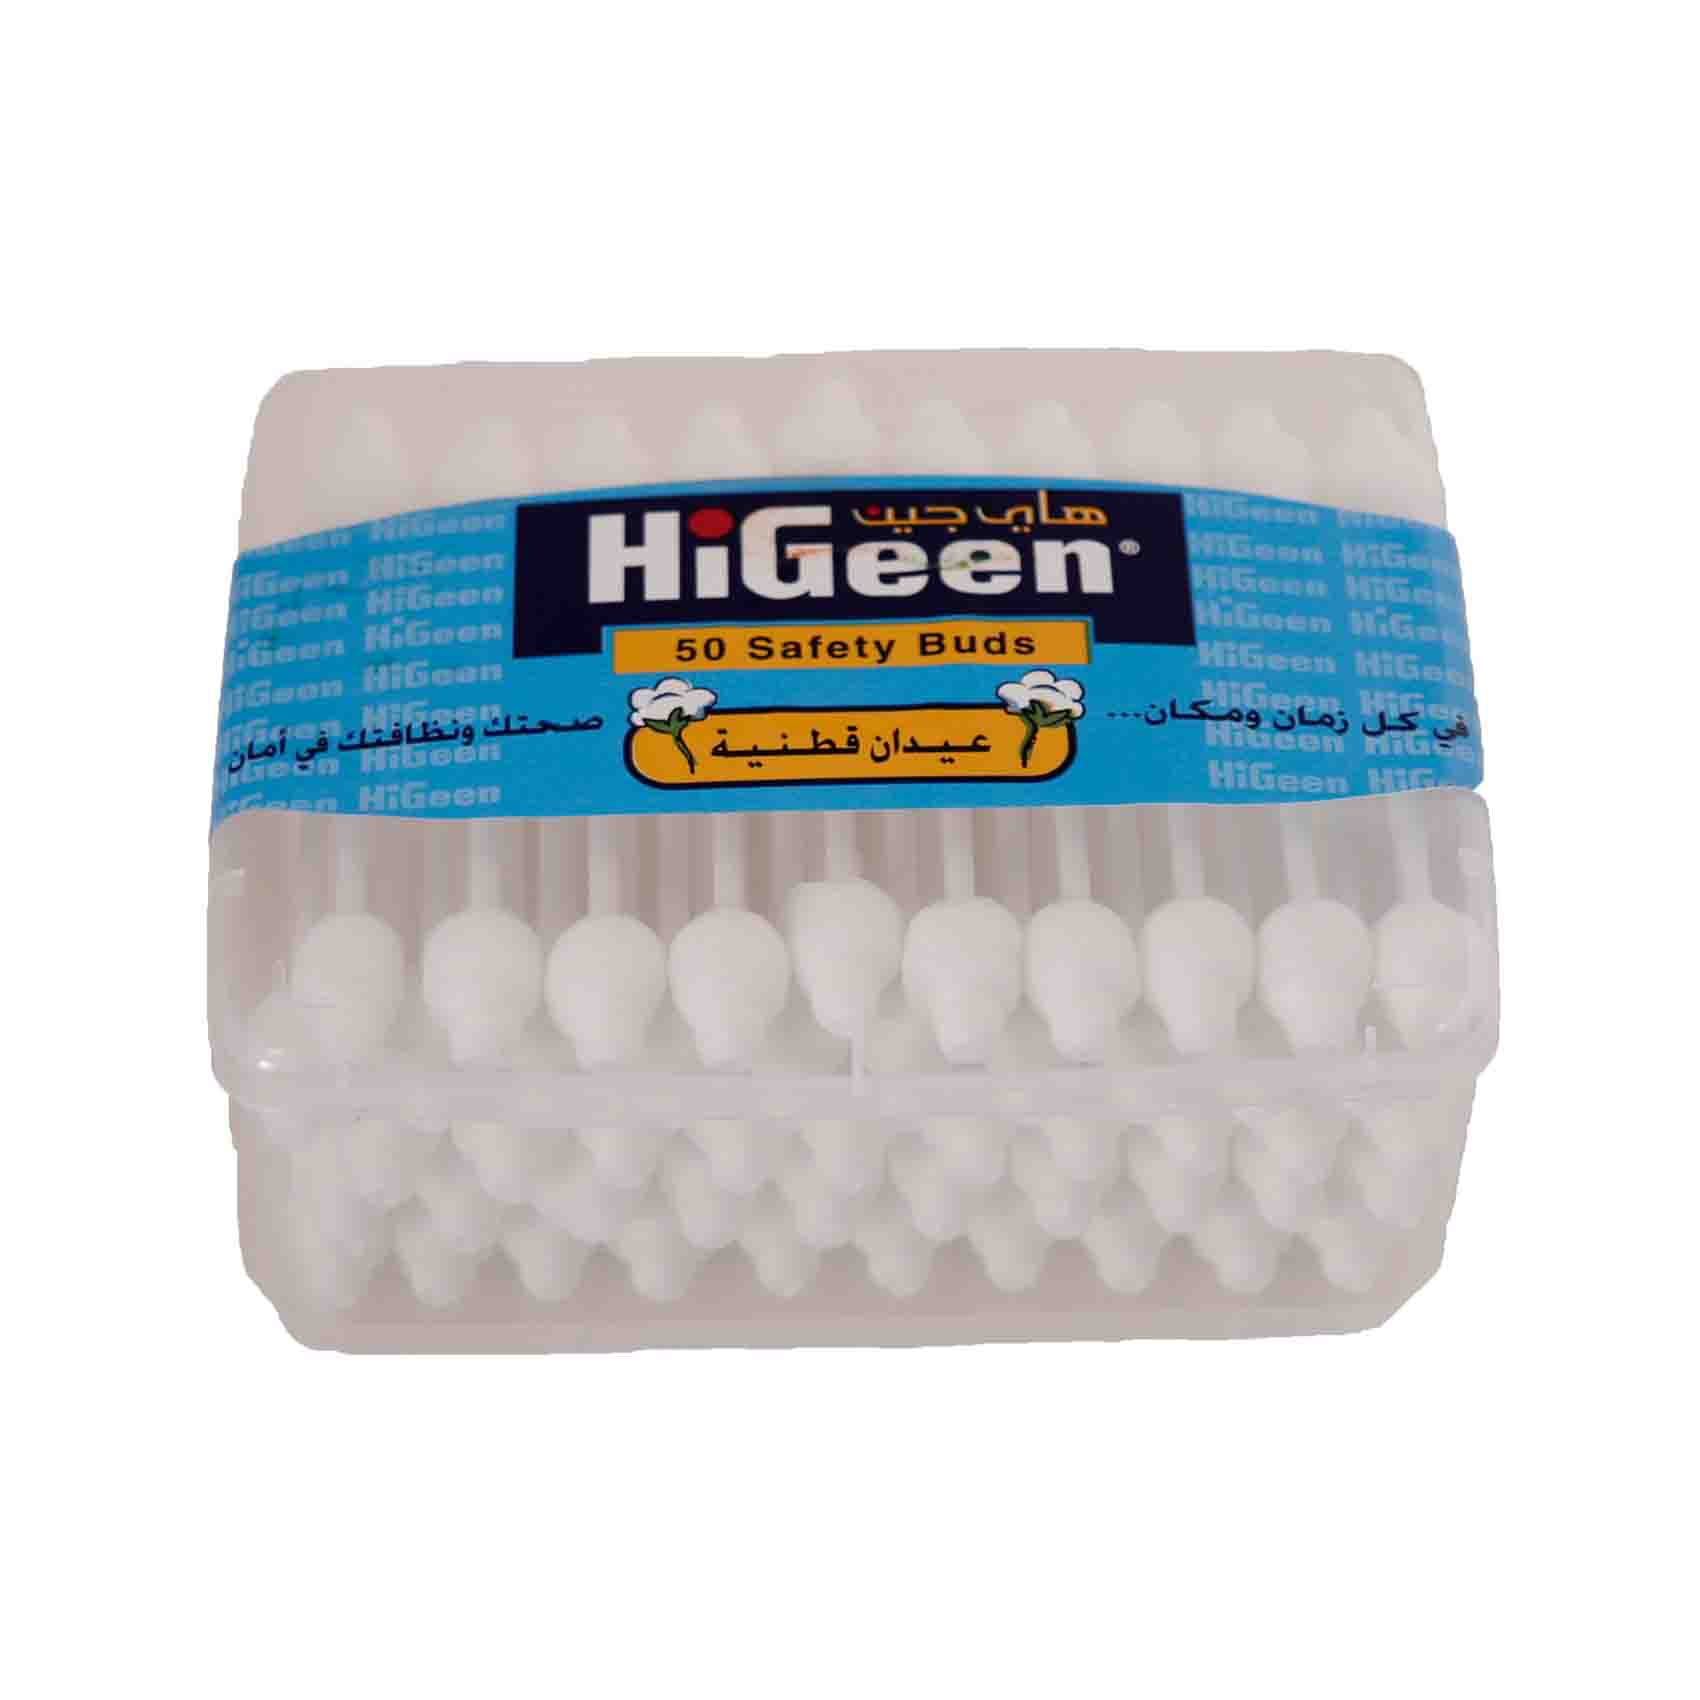 Higeen Safety Buds 50 Buds